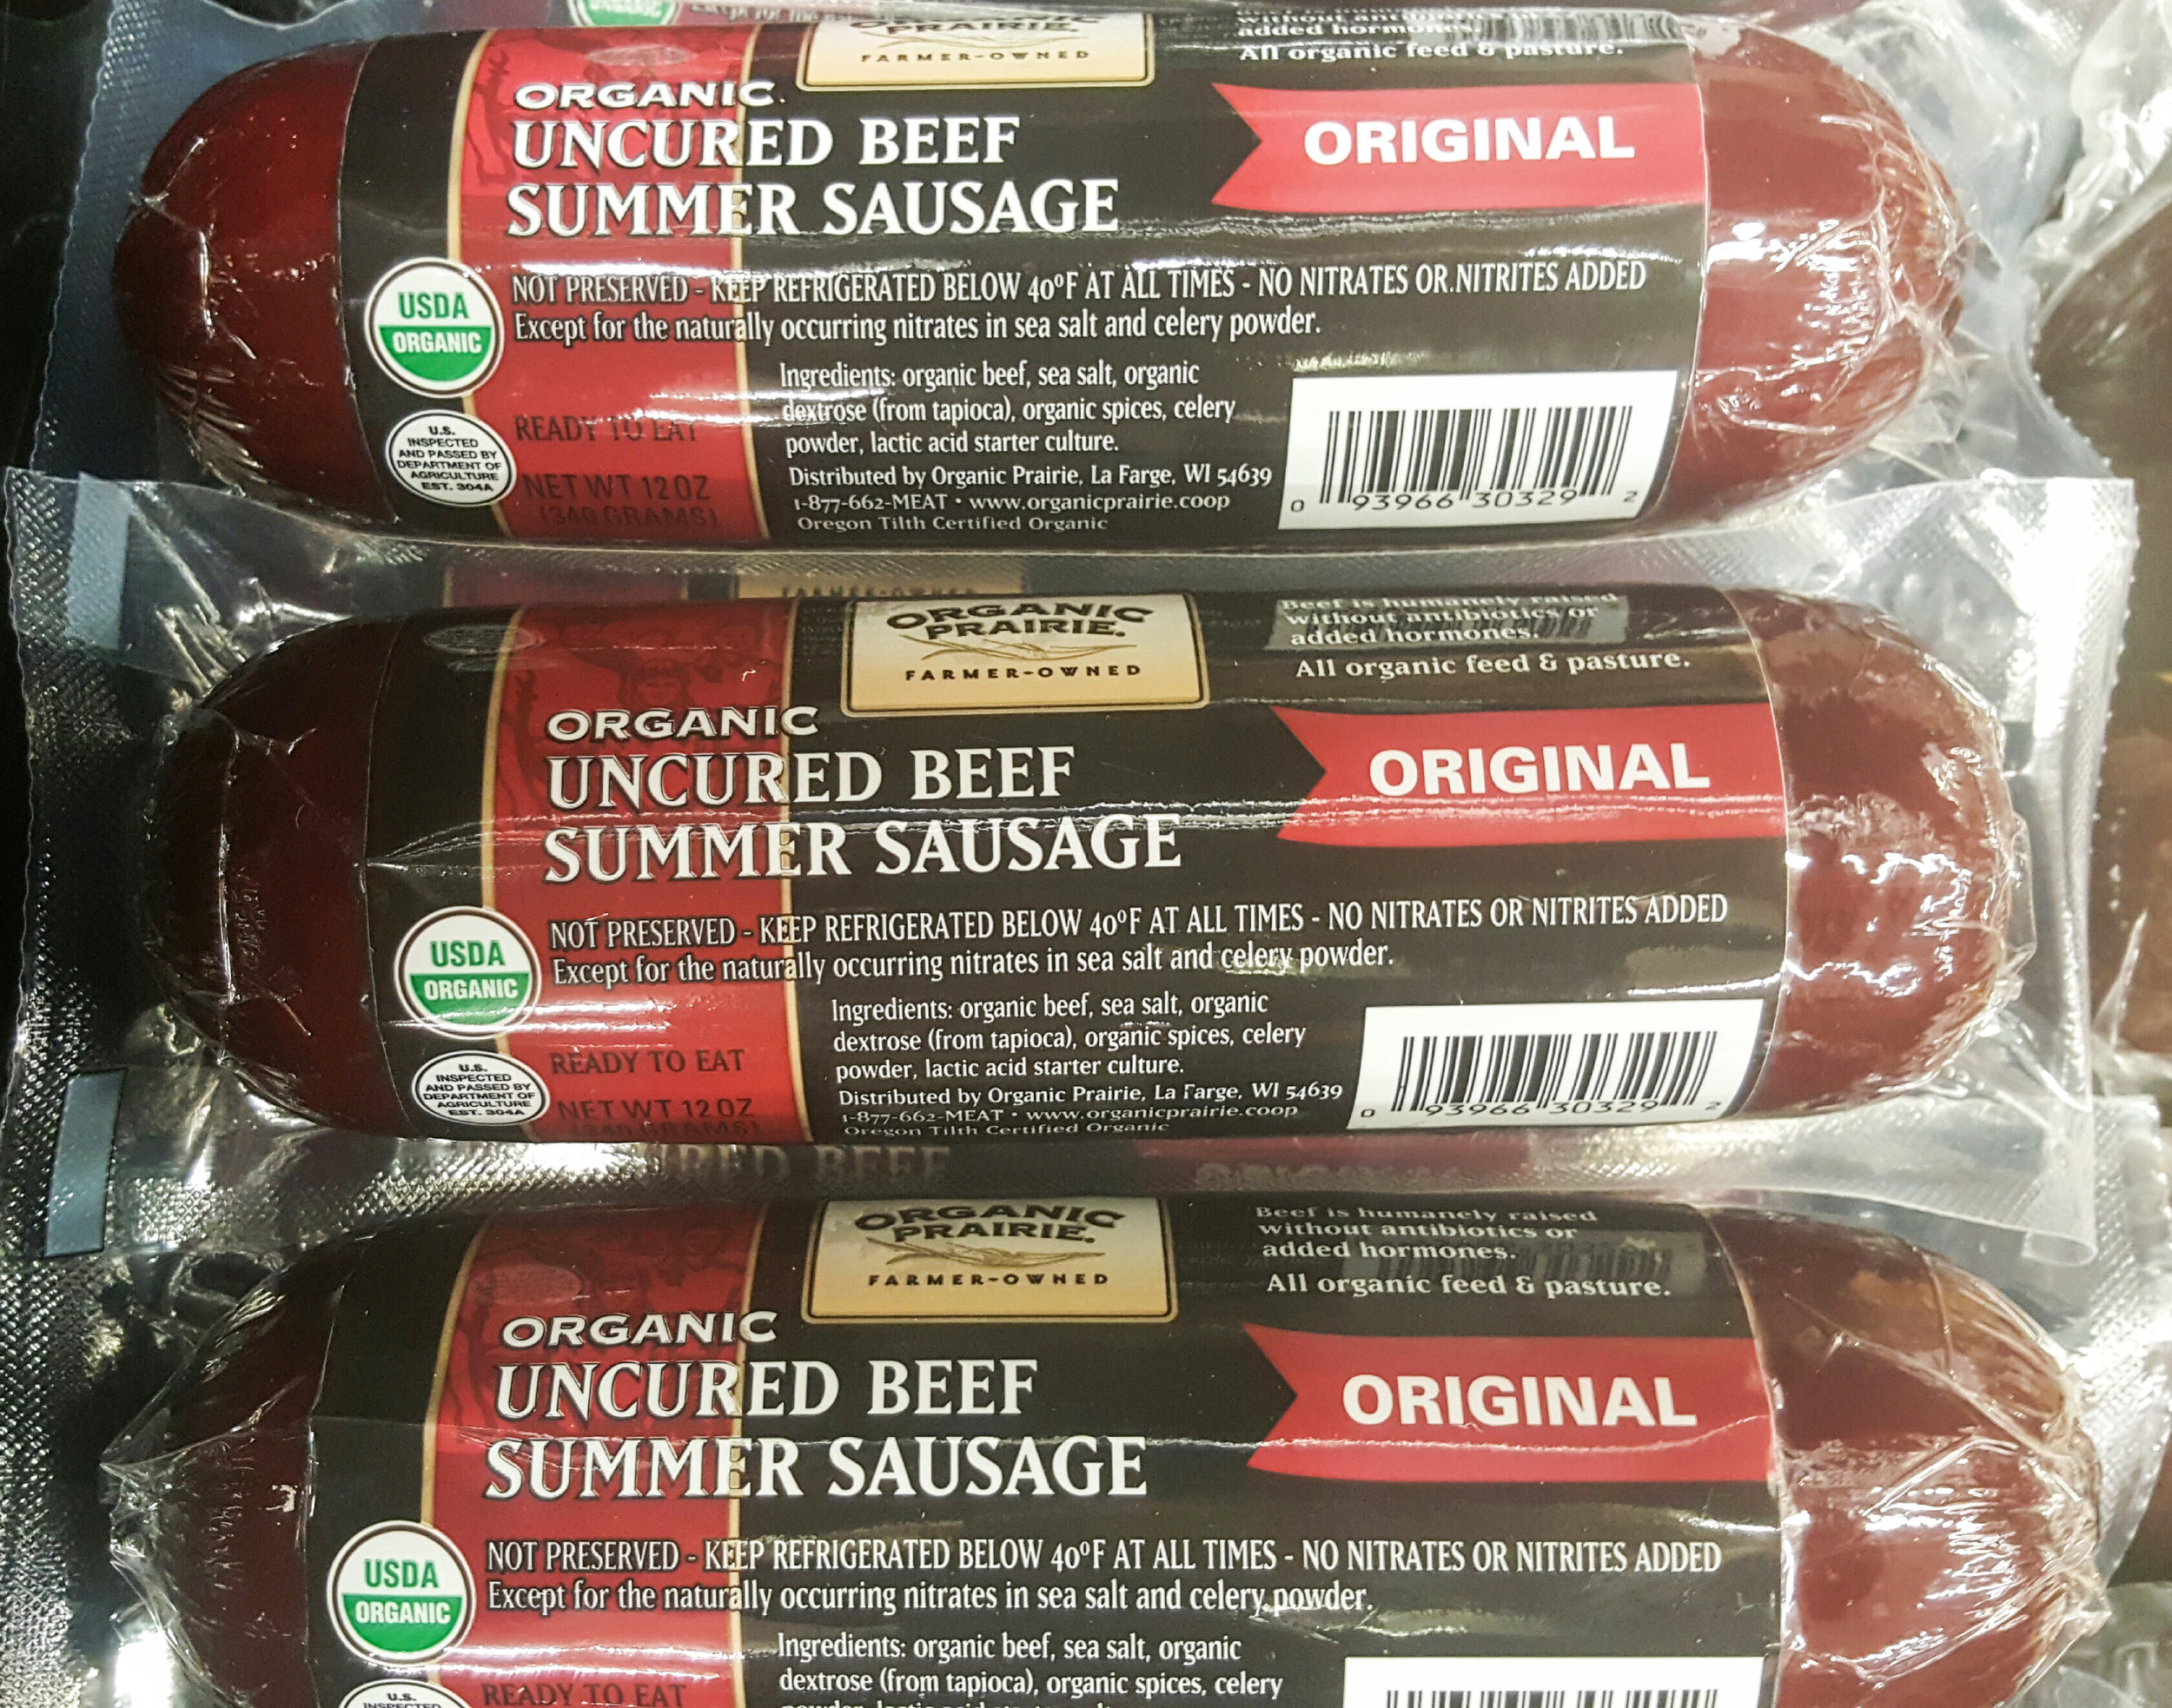 All-Natural Beef Summer Sausage